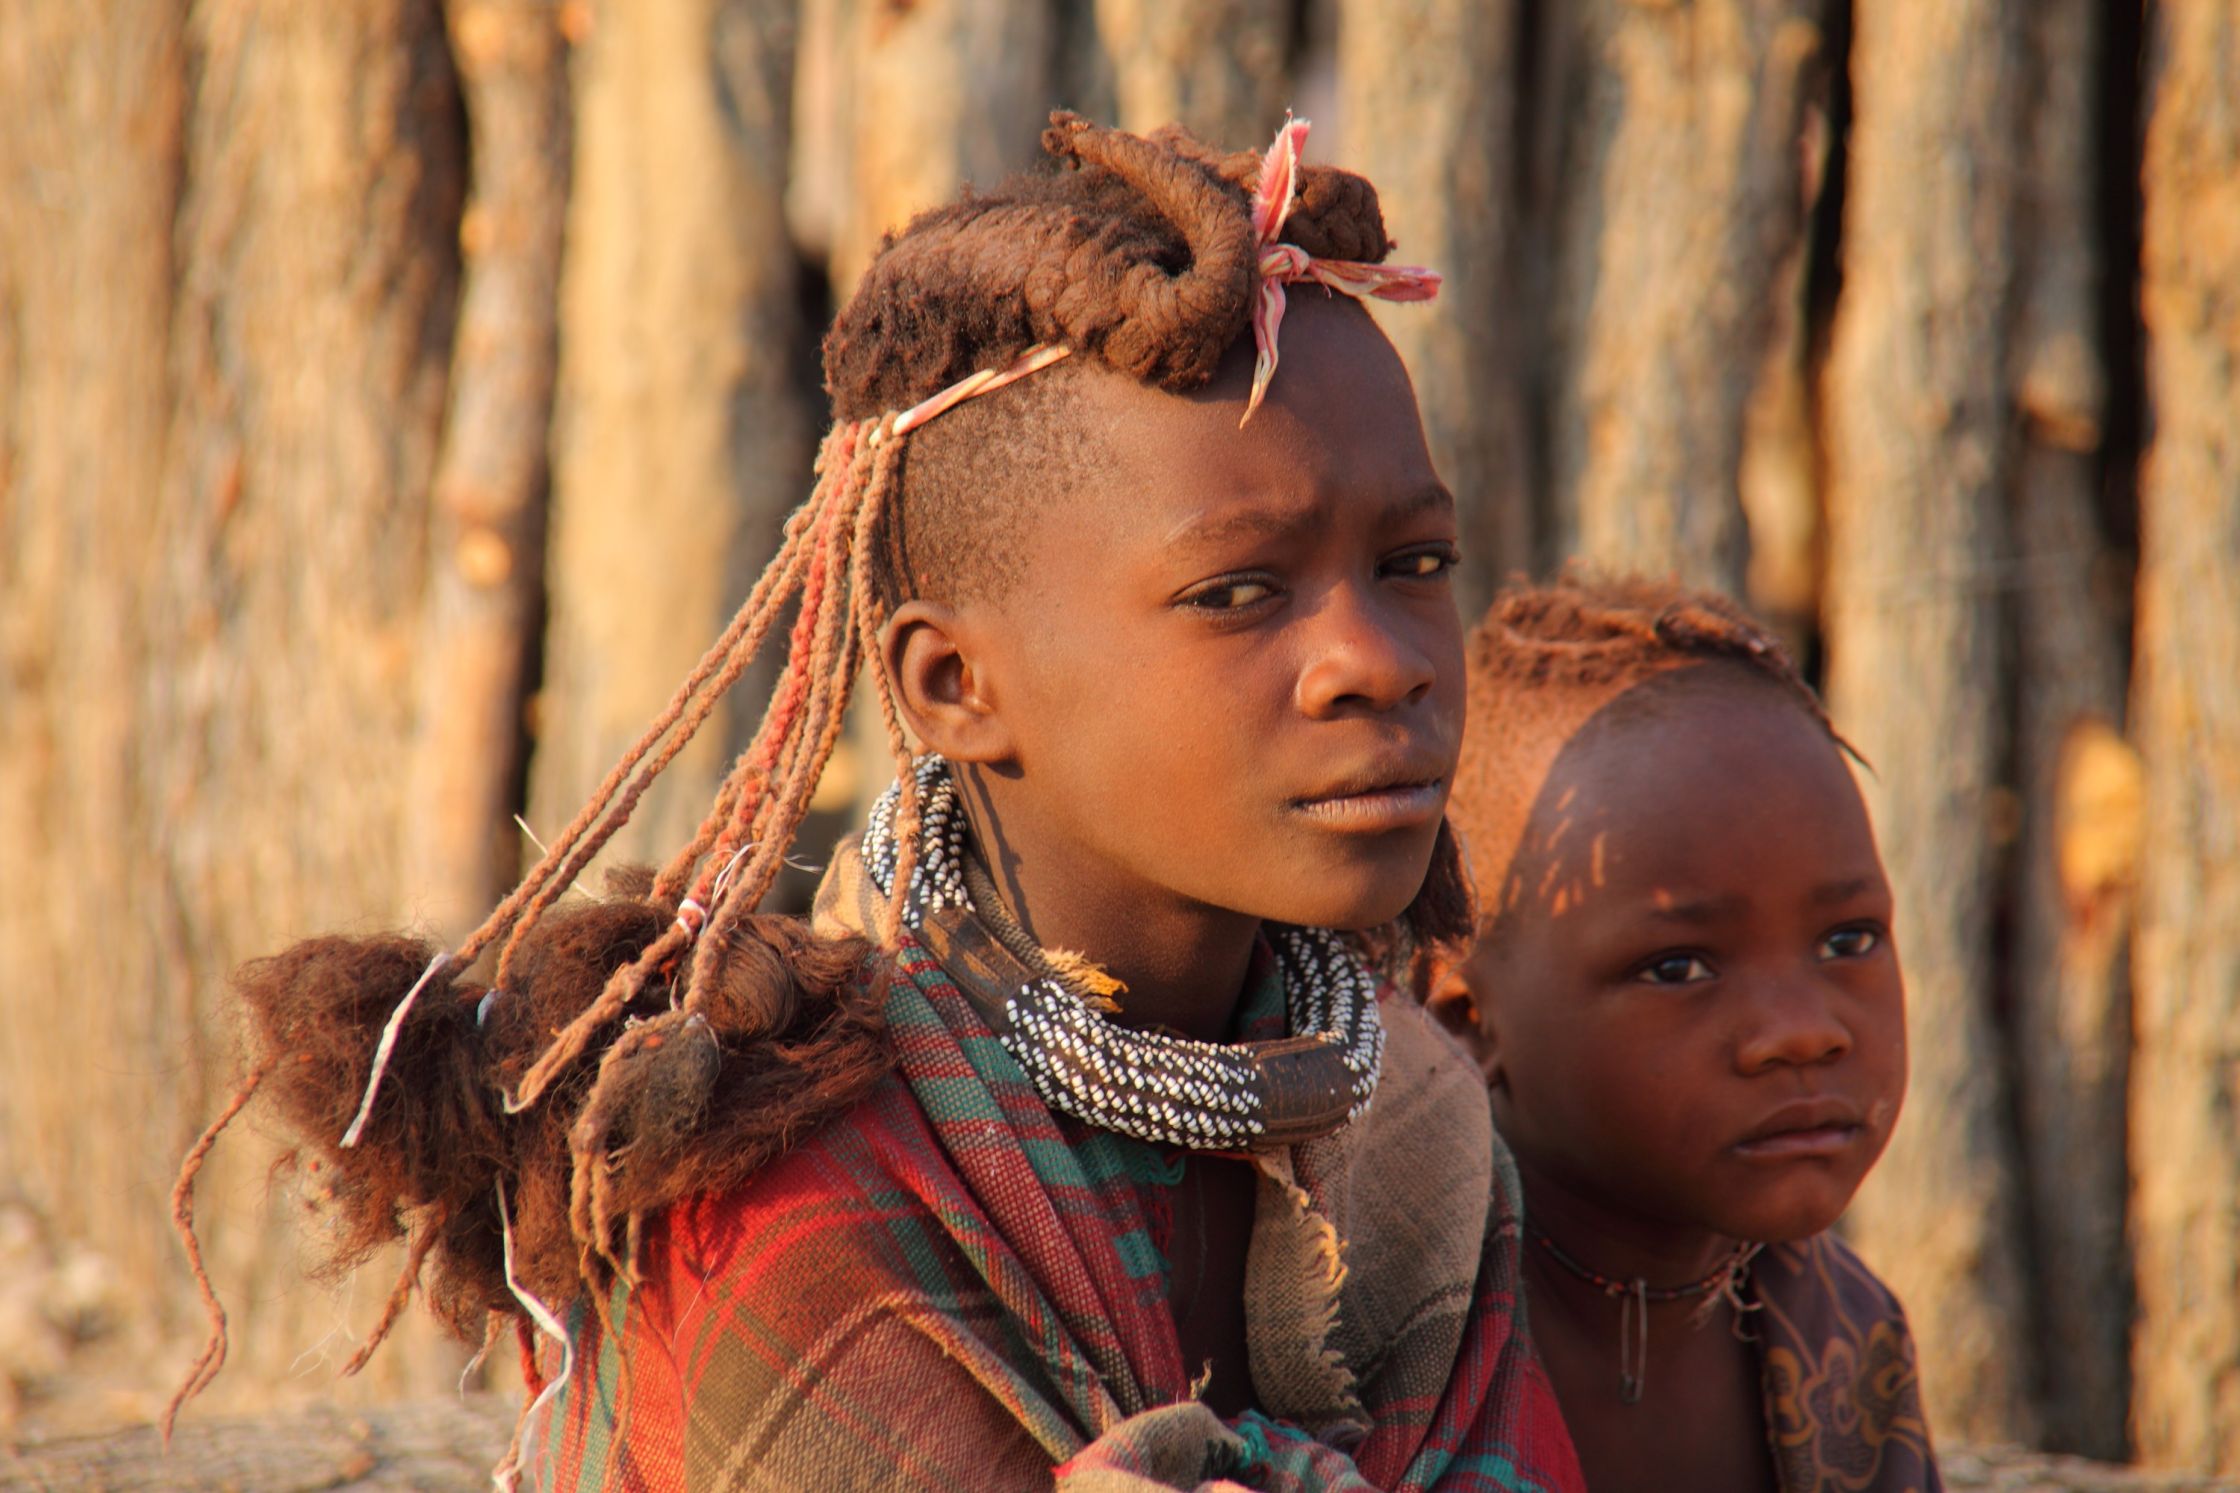 Tribe himba pro. Химба Намибия. Племя Химба. Племя Химба в Намибии. Племя Химба в Африке.